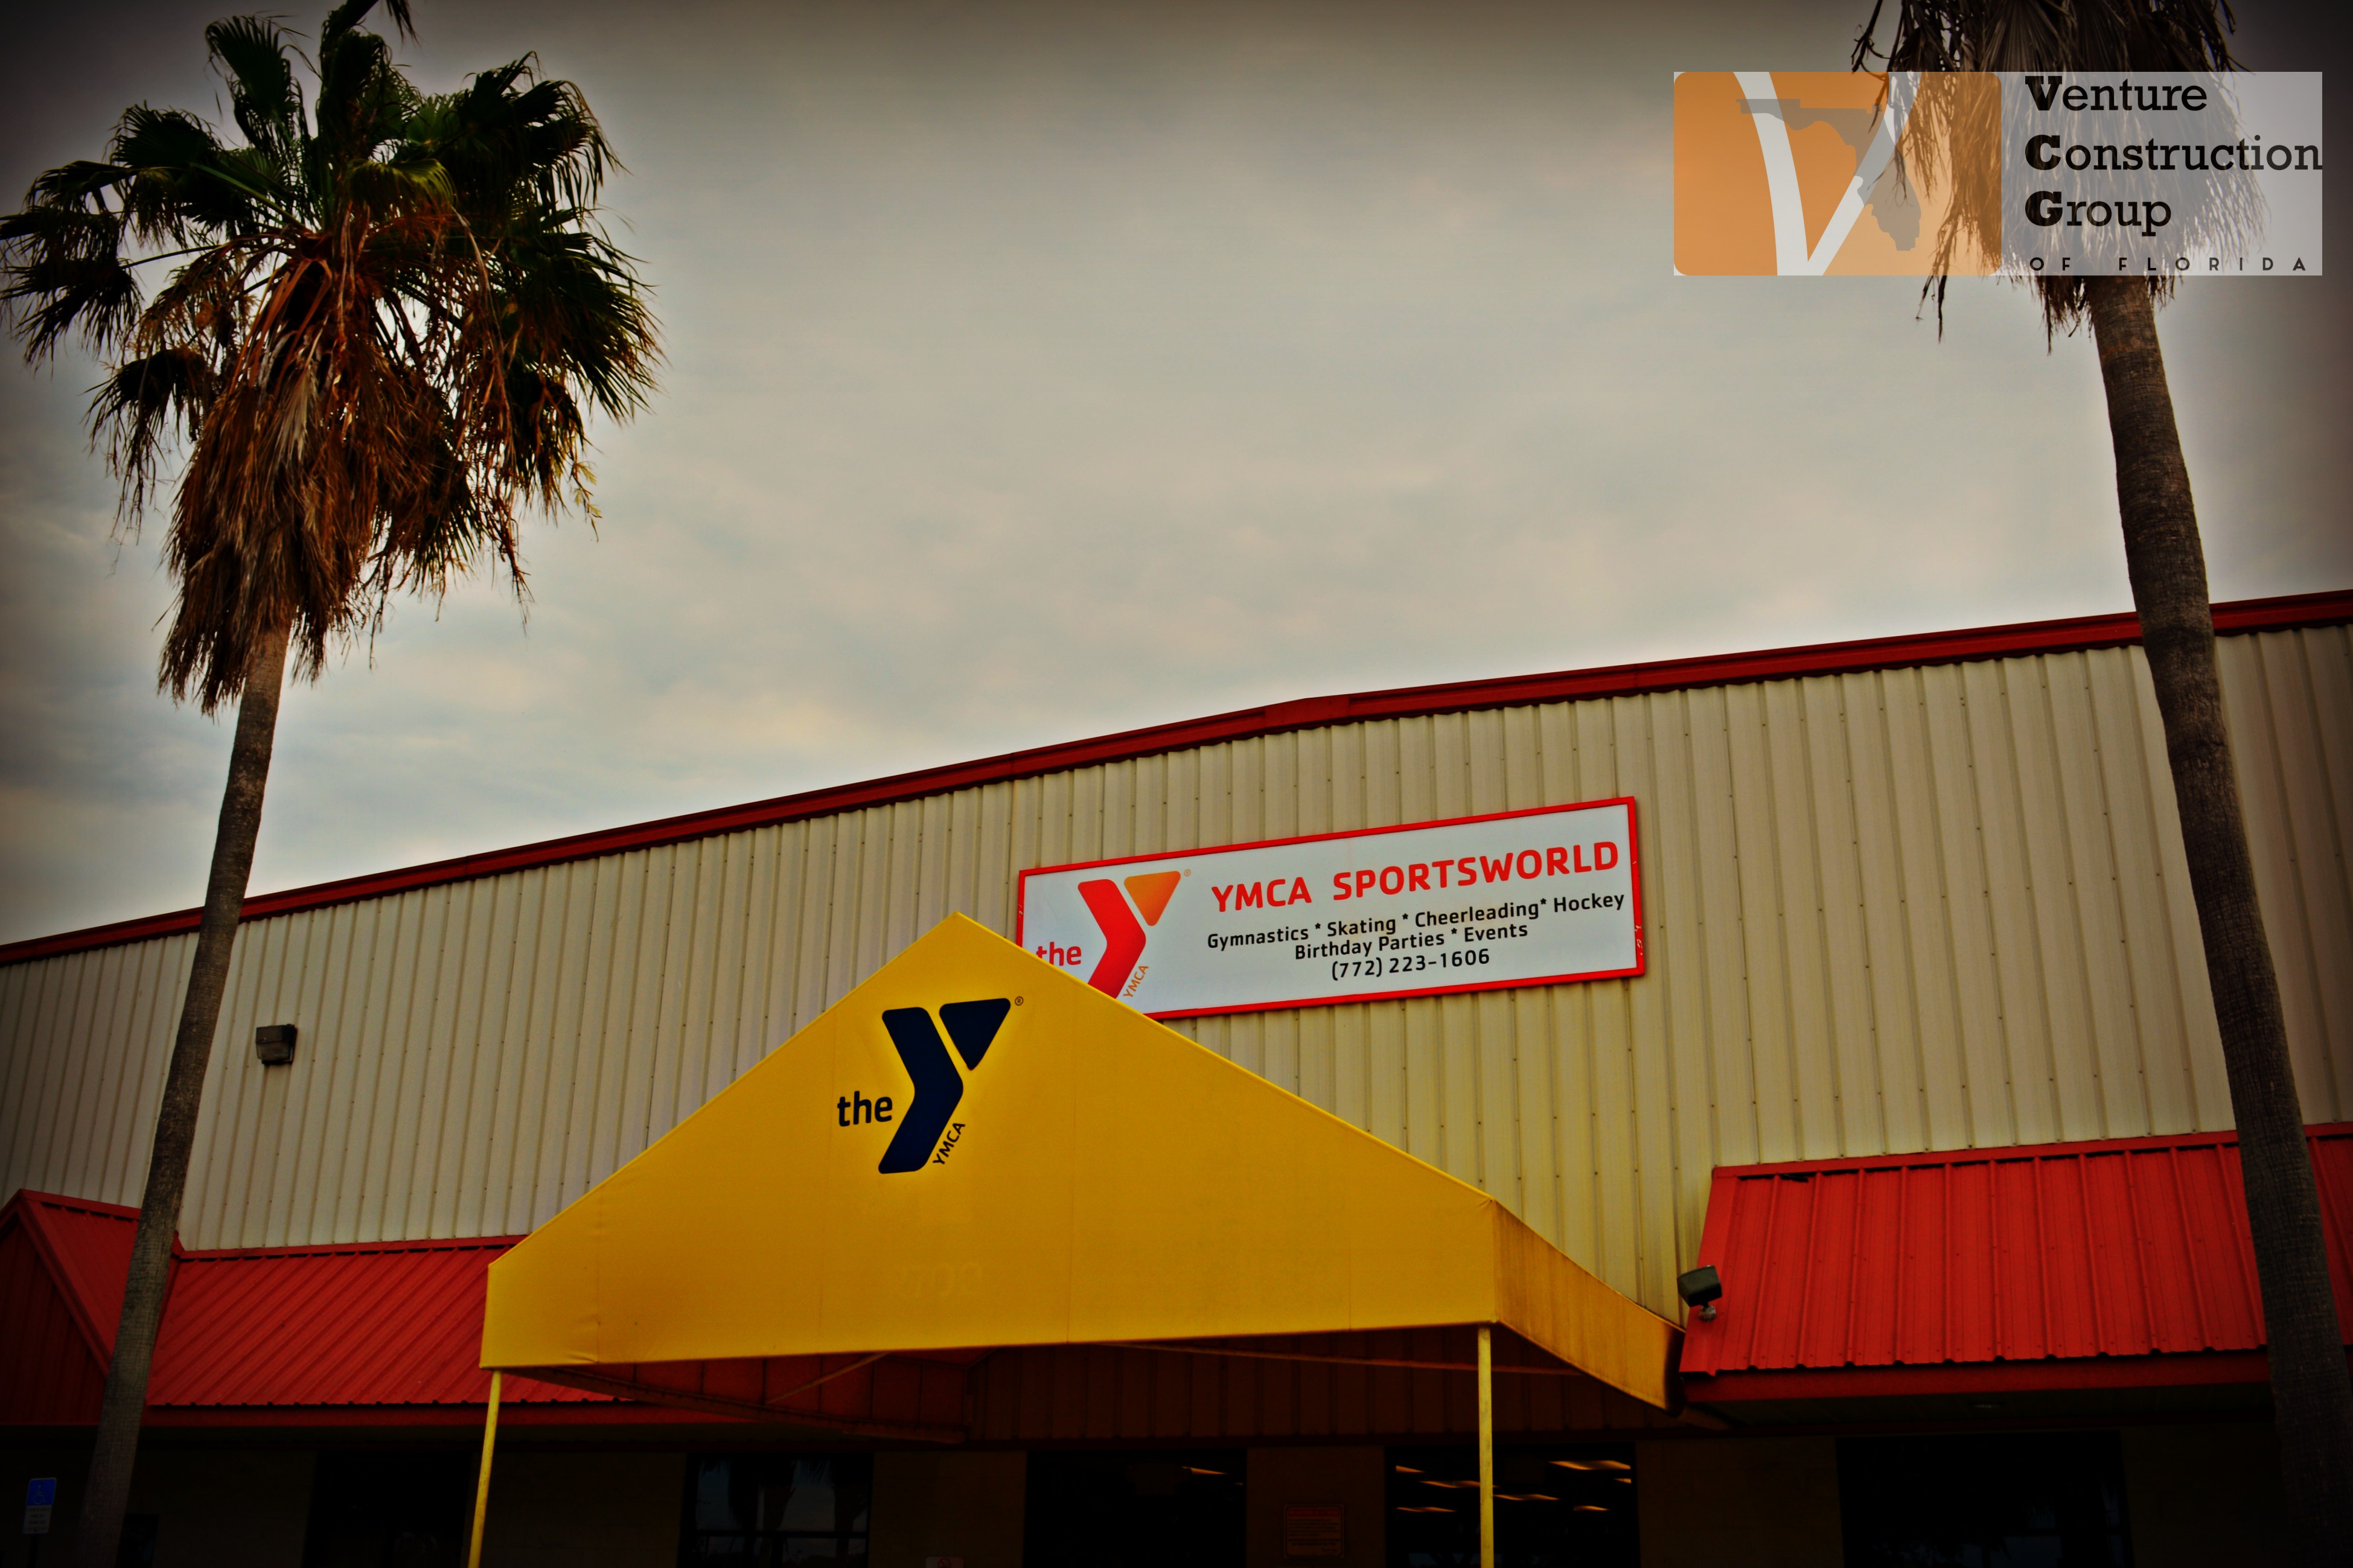 Venture Construction Group of Florida - YMCA Treasure Coast Sports World